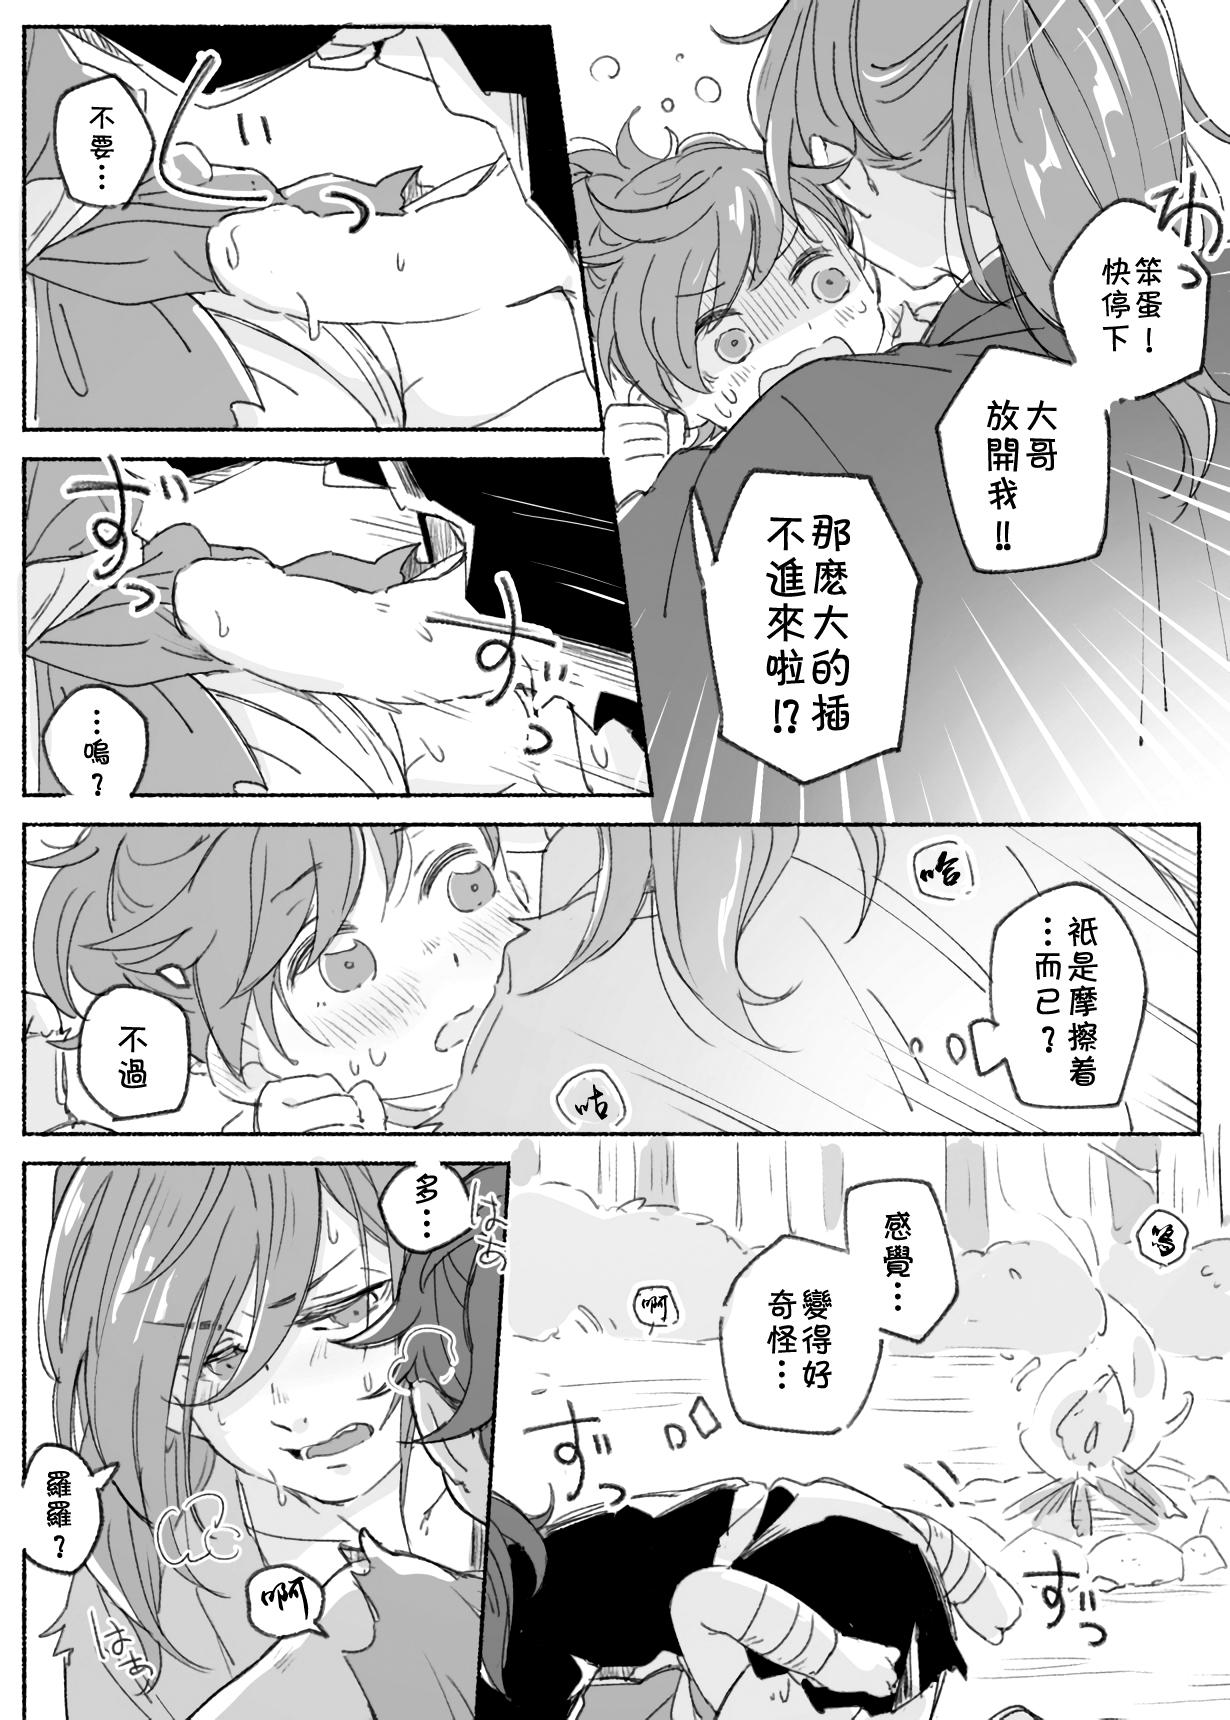 Enema Hyadoro manga - Dororo Large - Page 5